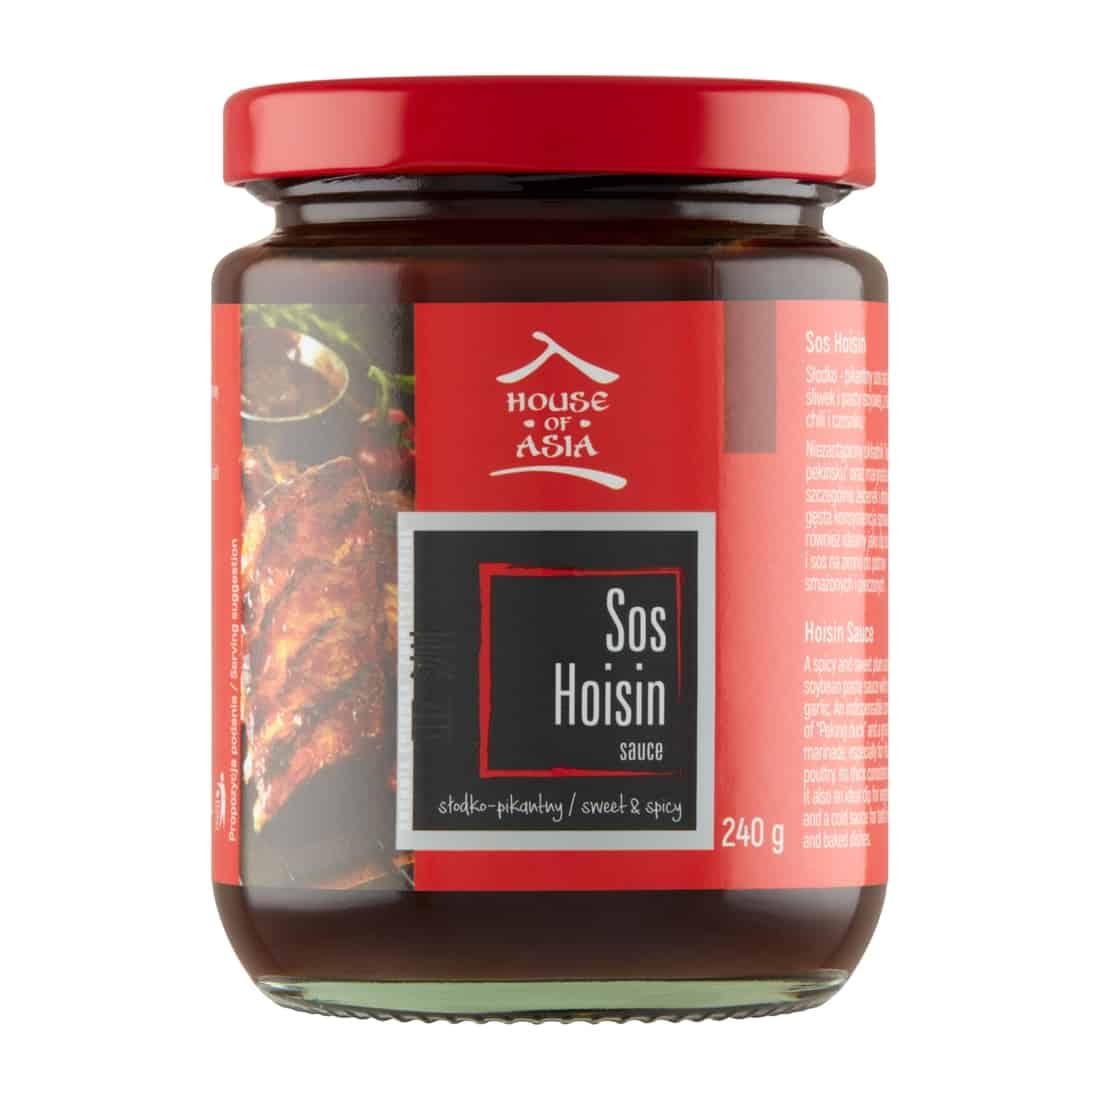 Sos Hoisin słodko pikantny stir-fry 240g House of Asia